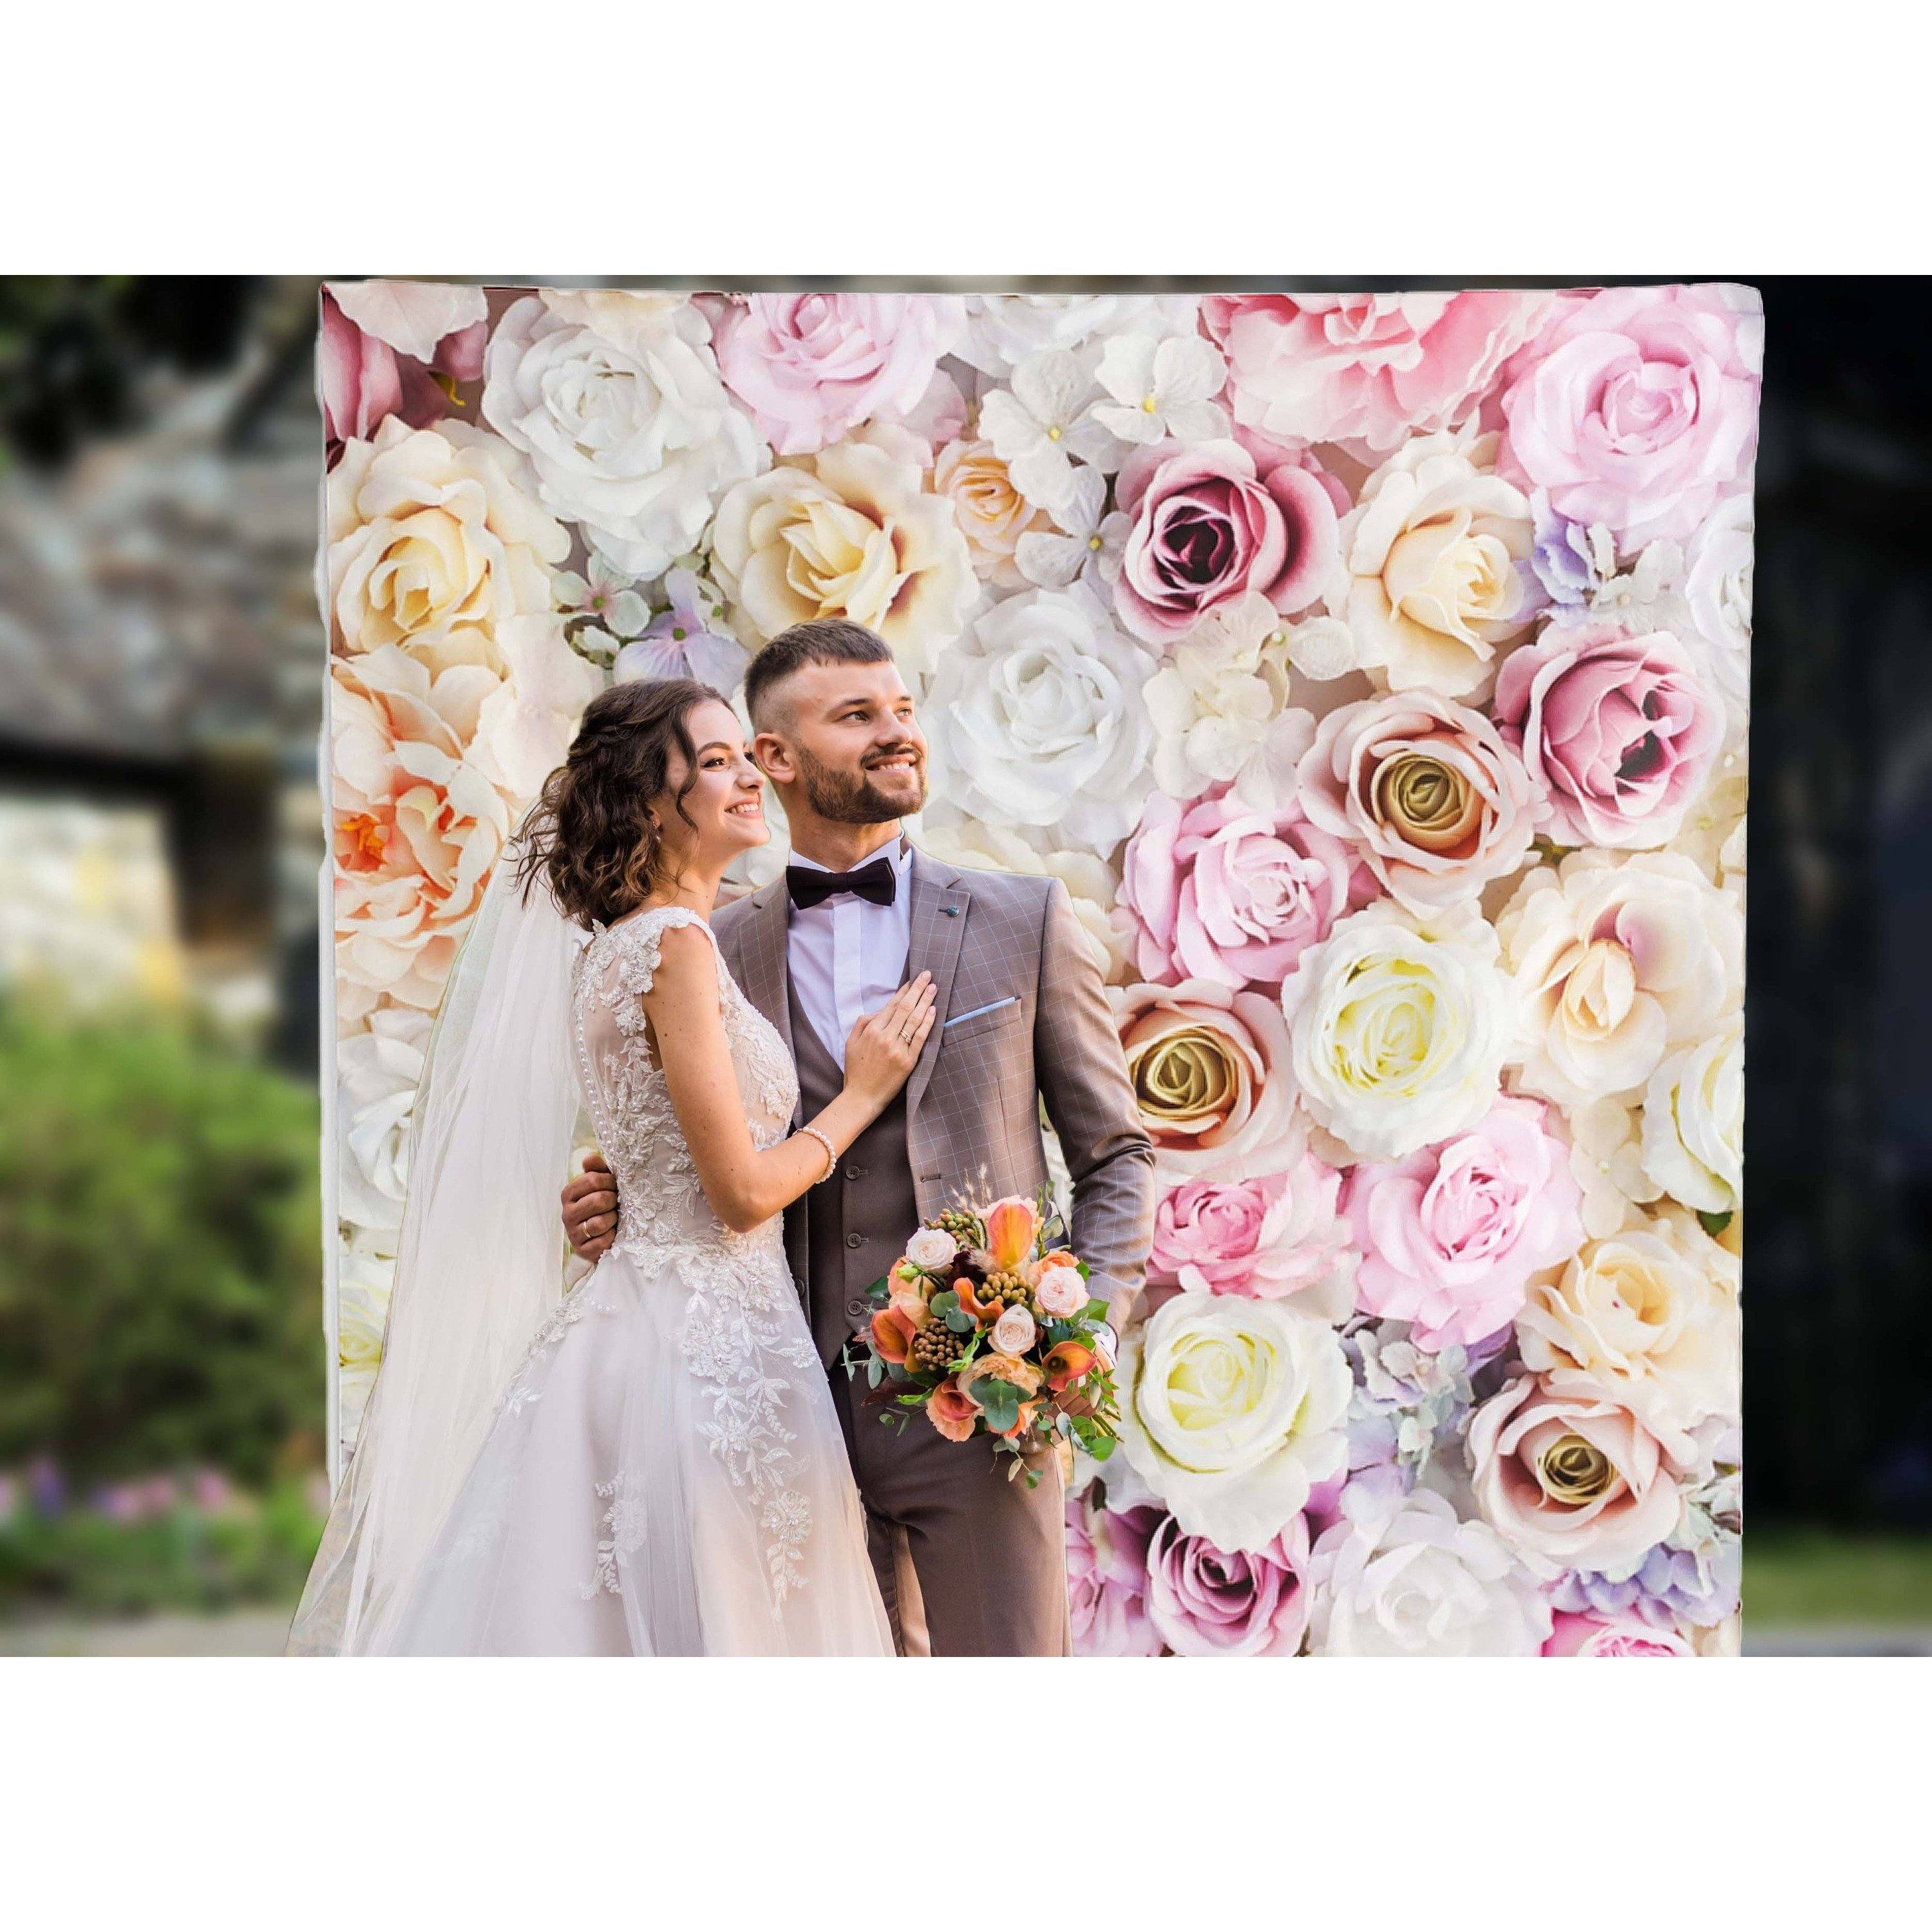 Personalized Flower Wedding Backdrop - Durable print fabric backdrop iJay Backdrops 